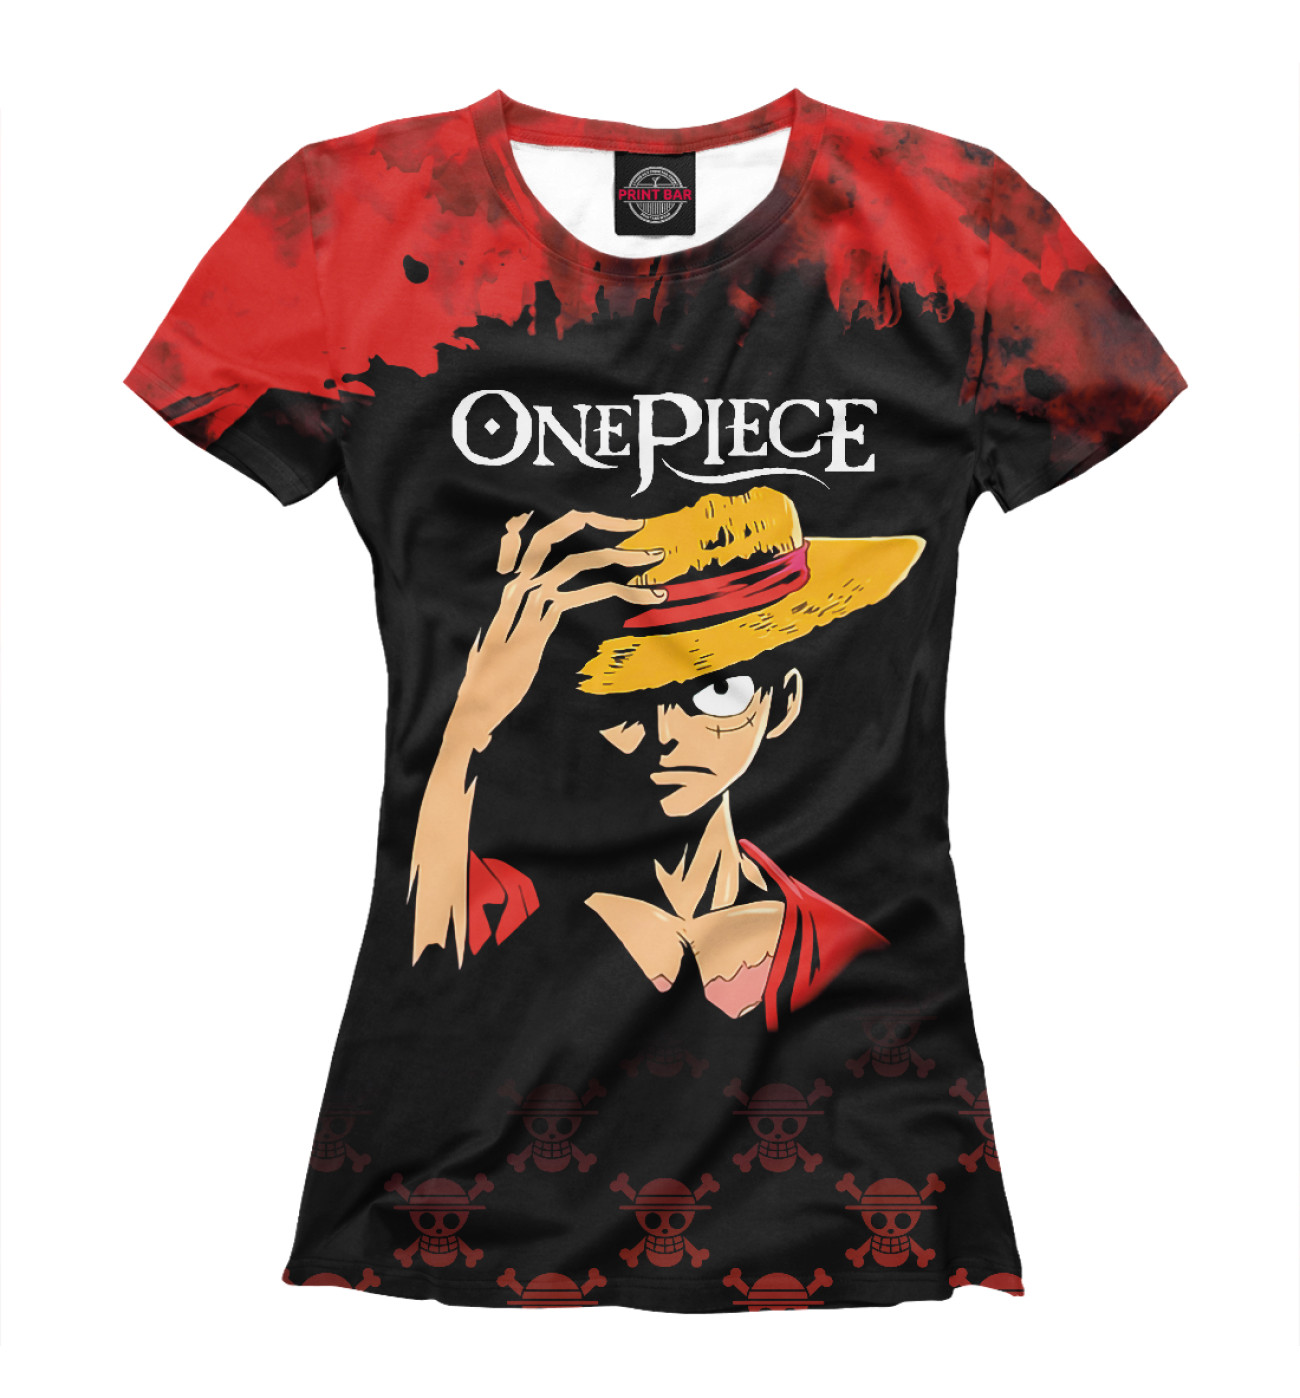 Женская Футболка One Piece Большой куш, артикул: ONP-565903-fut-1